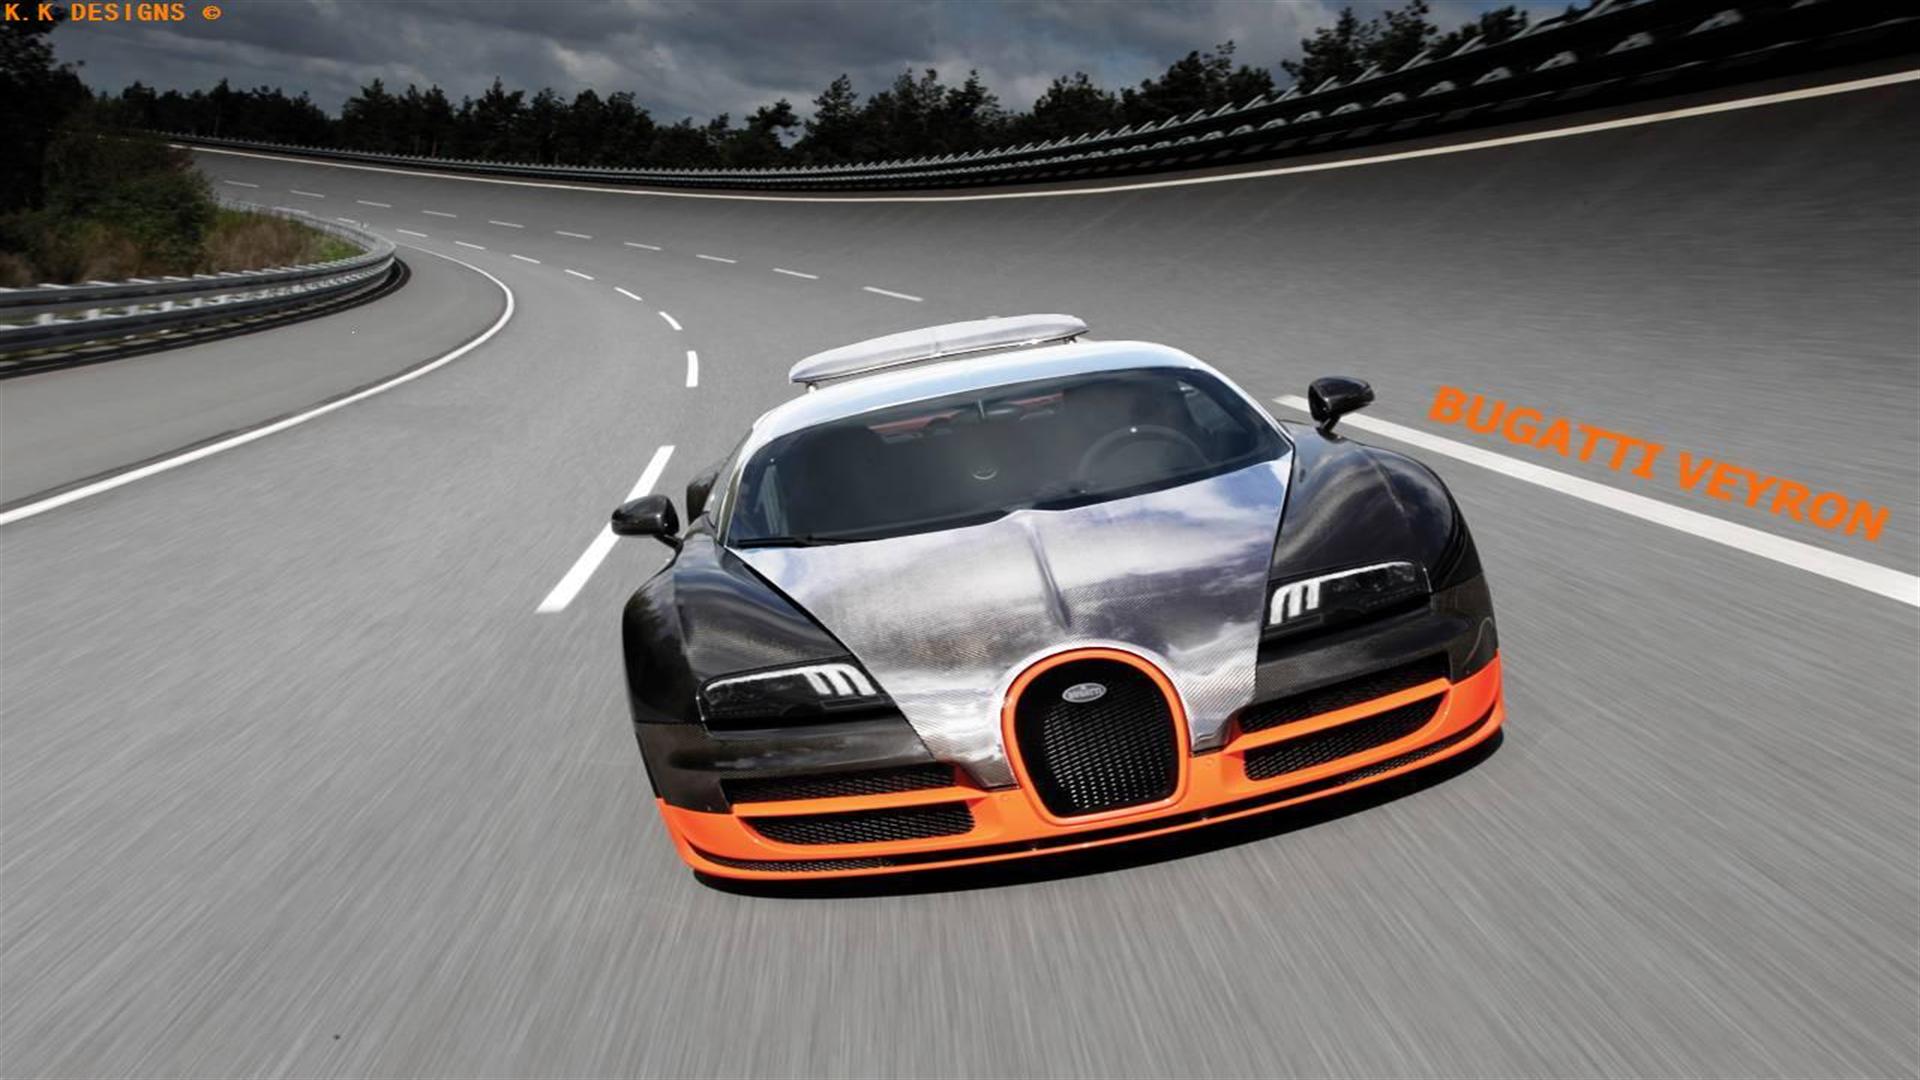 Kk Designs Bugatti Veyron Wallpaper 1080p HD High Resolution Image